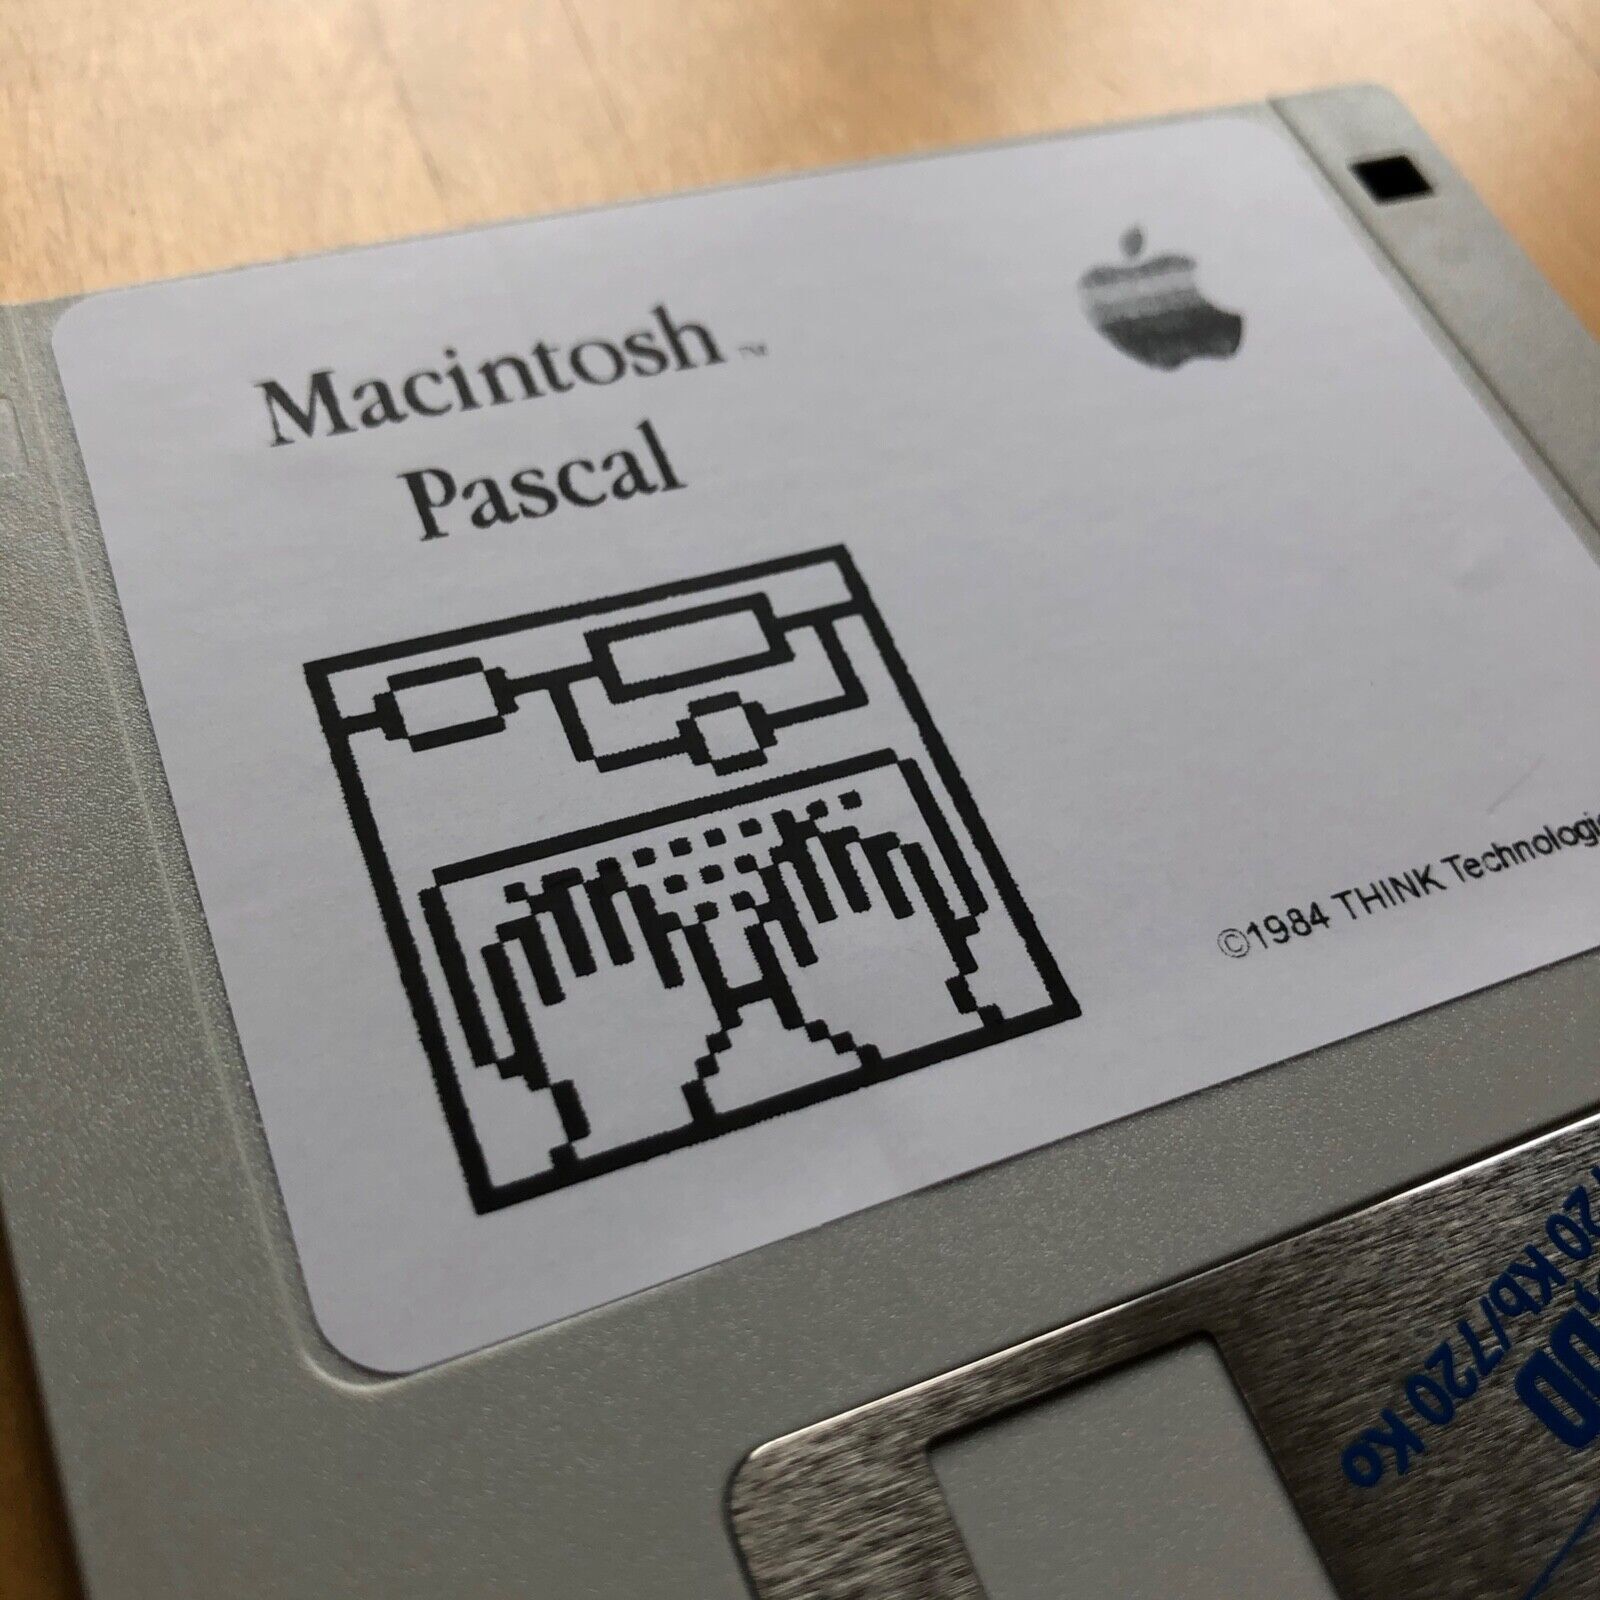  Apple Macintosh Pascal 1.0 (1984) floppy disk - 800k